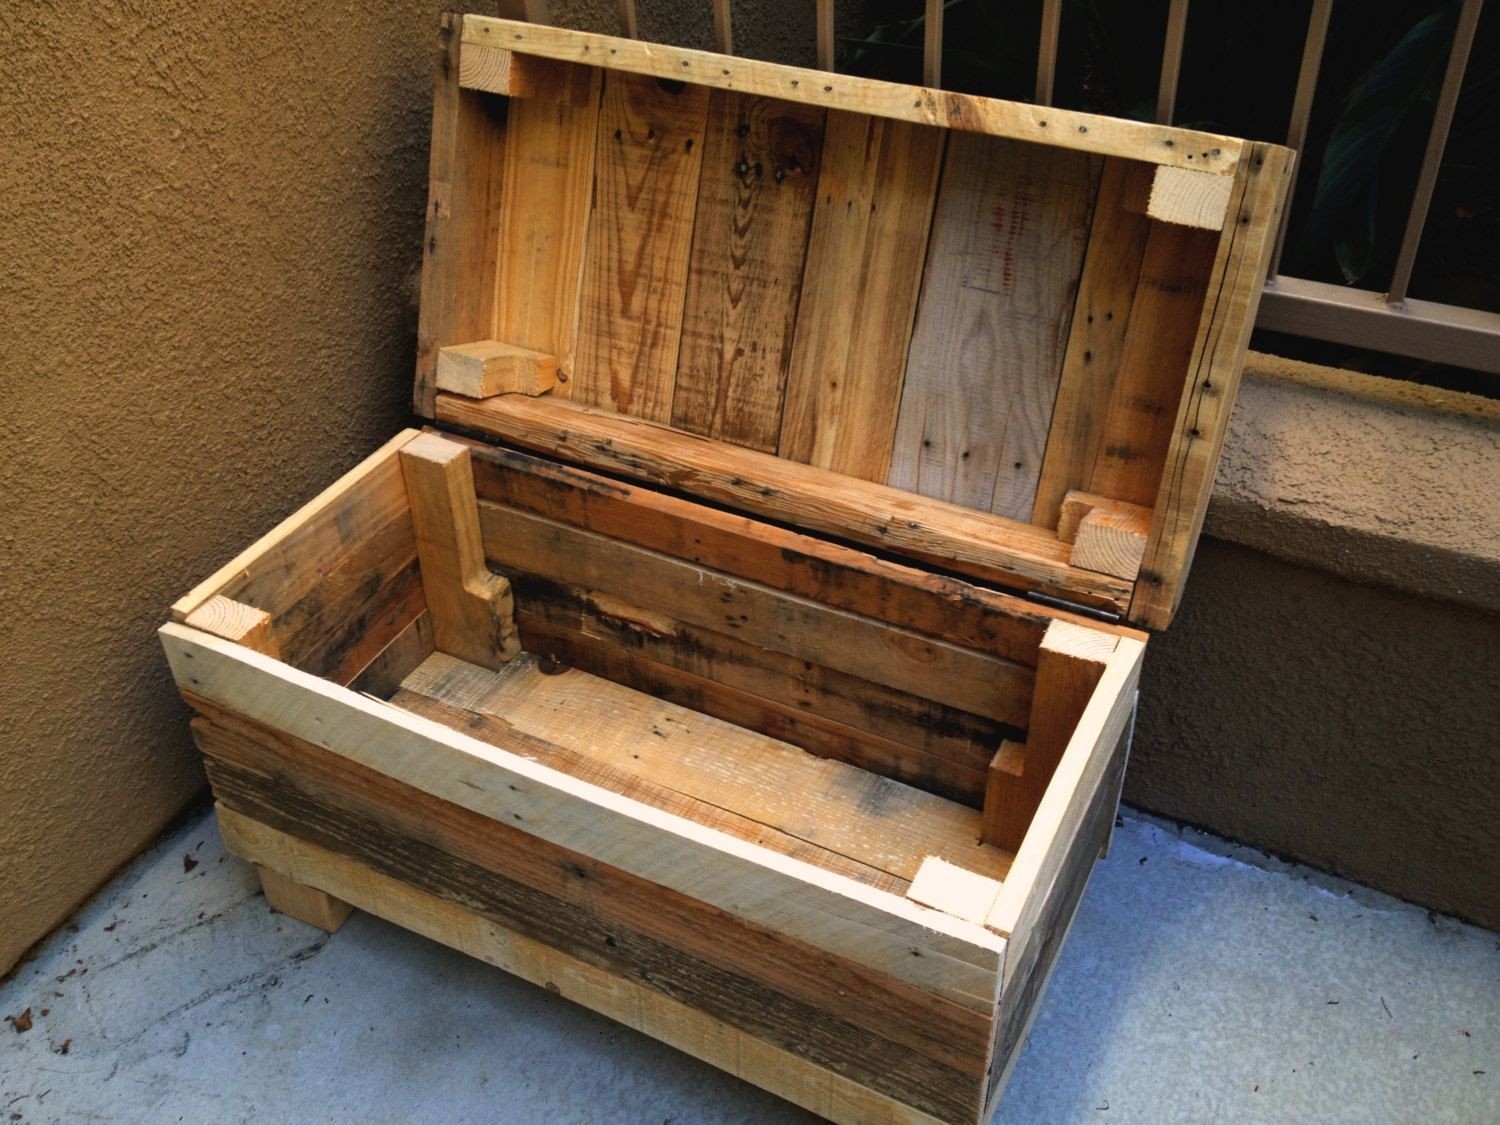 toy wooden chest